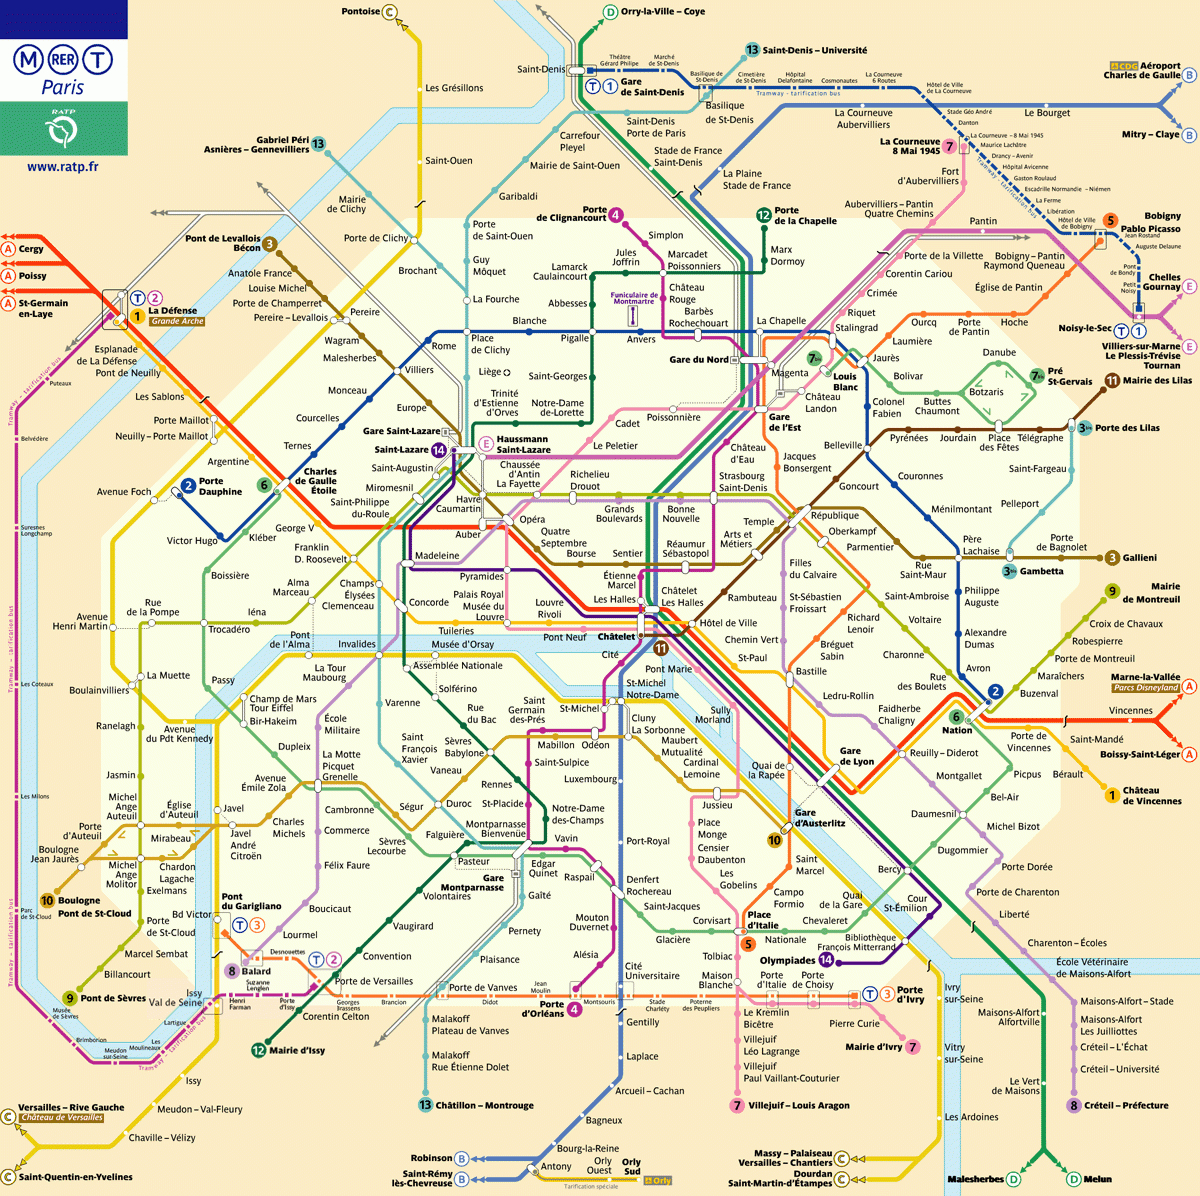 Printable Paris Metro Map. Printable Rer Metro Map Pdf. - Map Of Paris Metro Printable